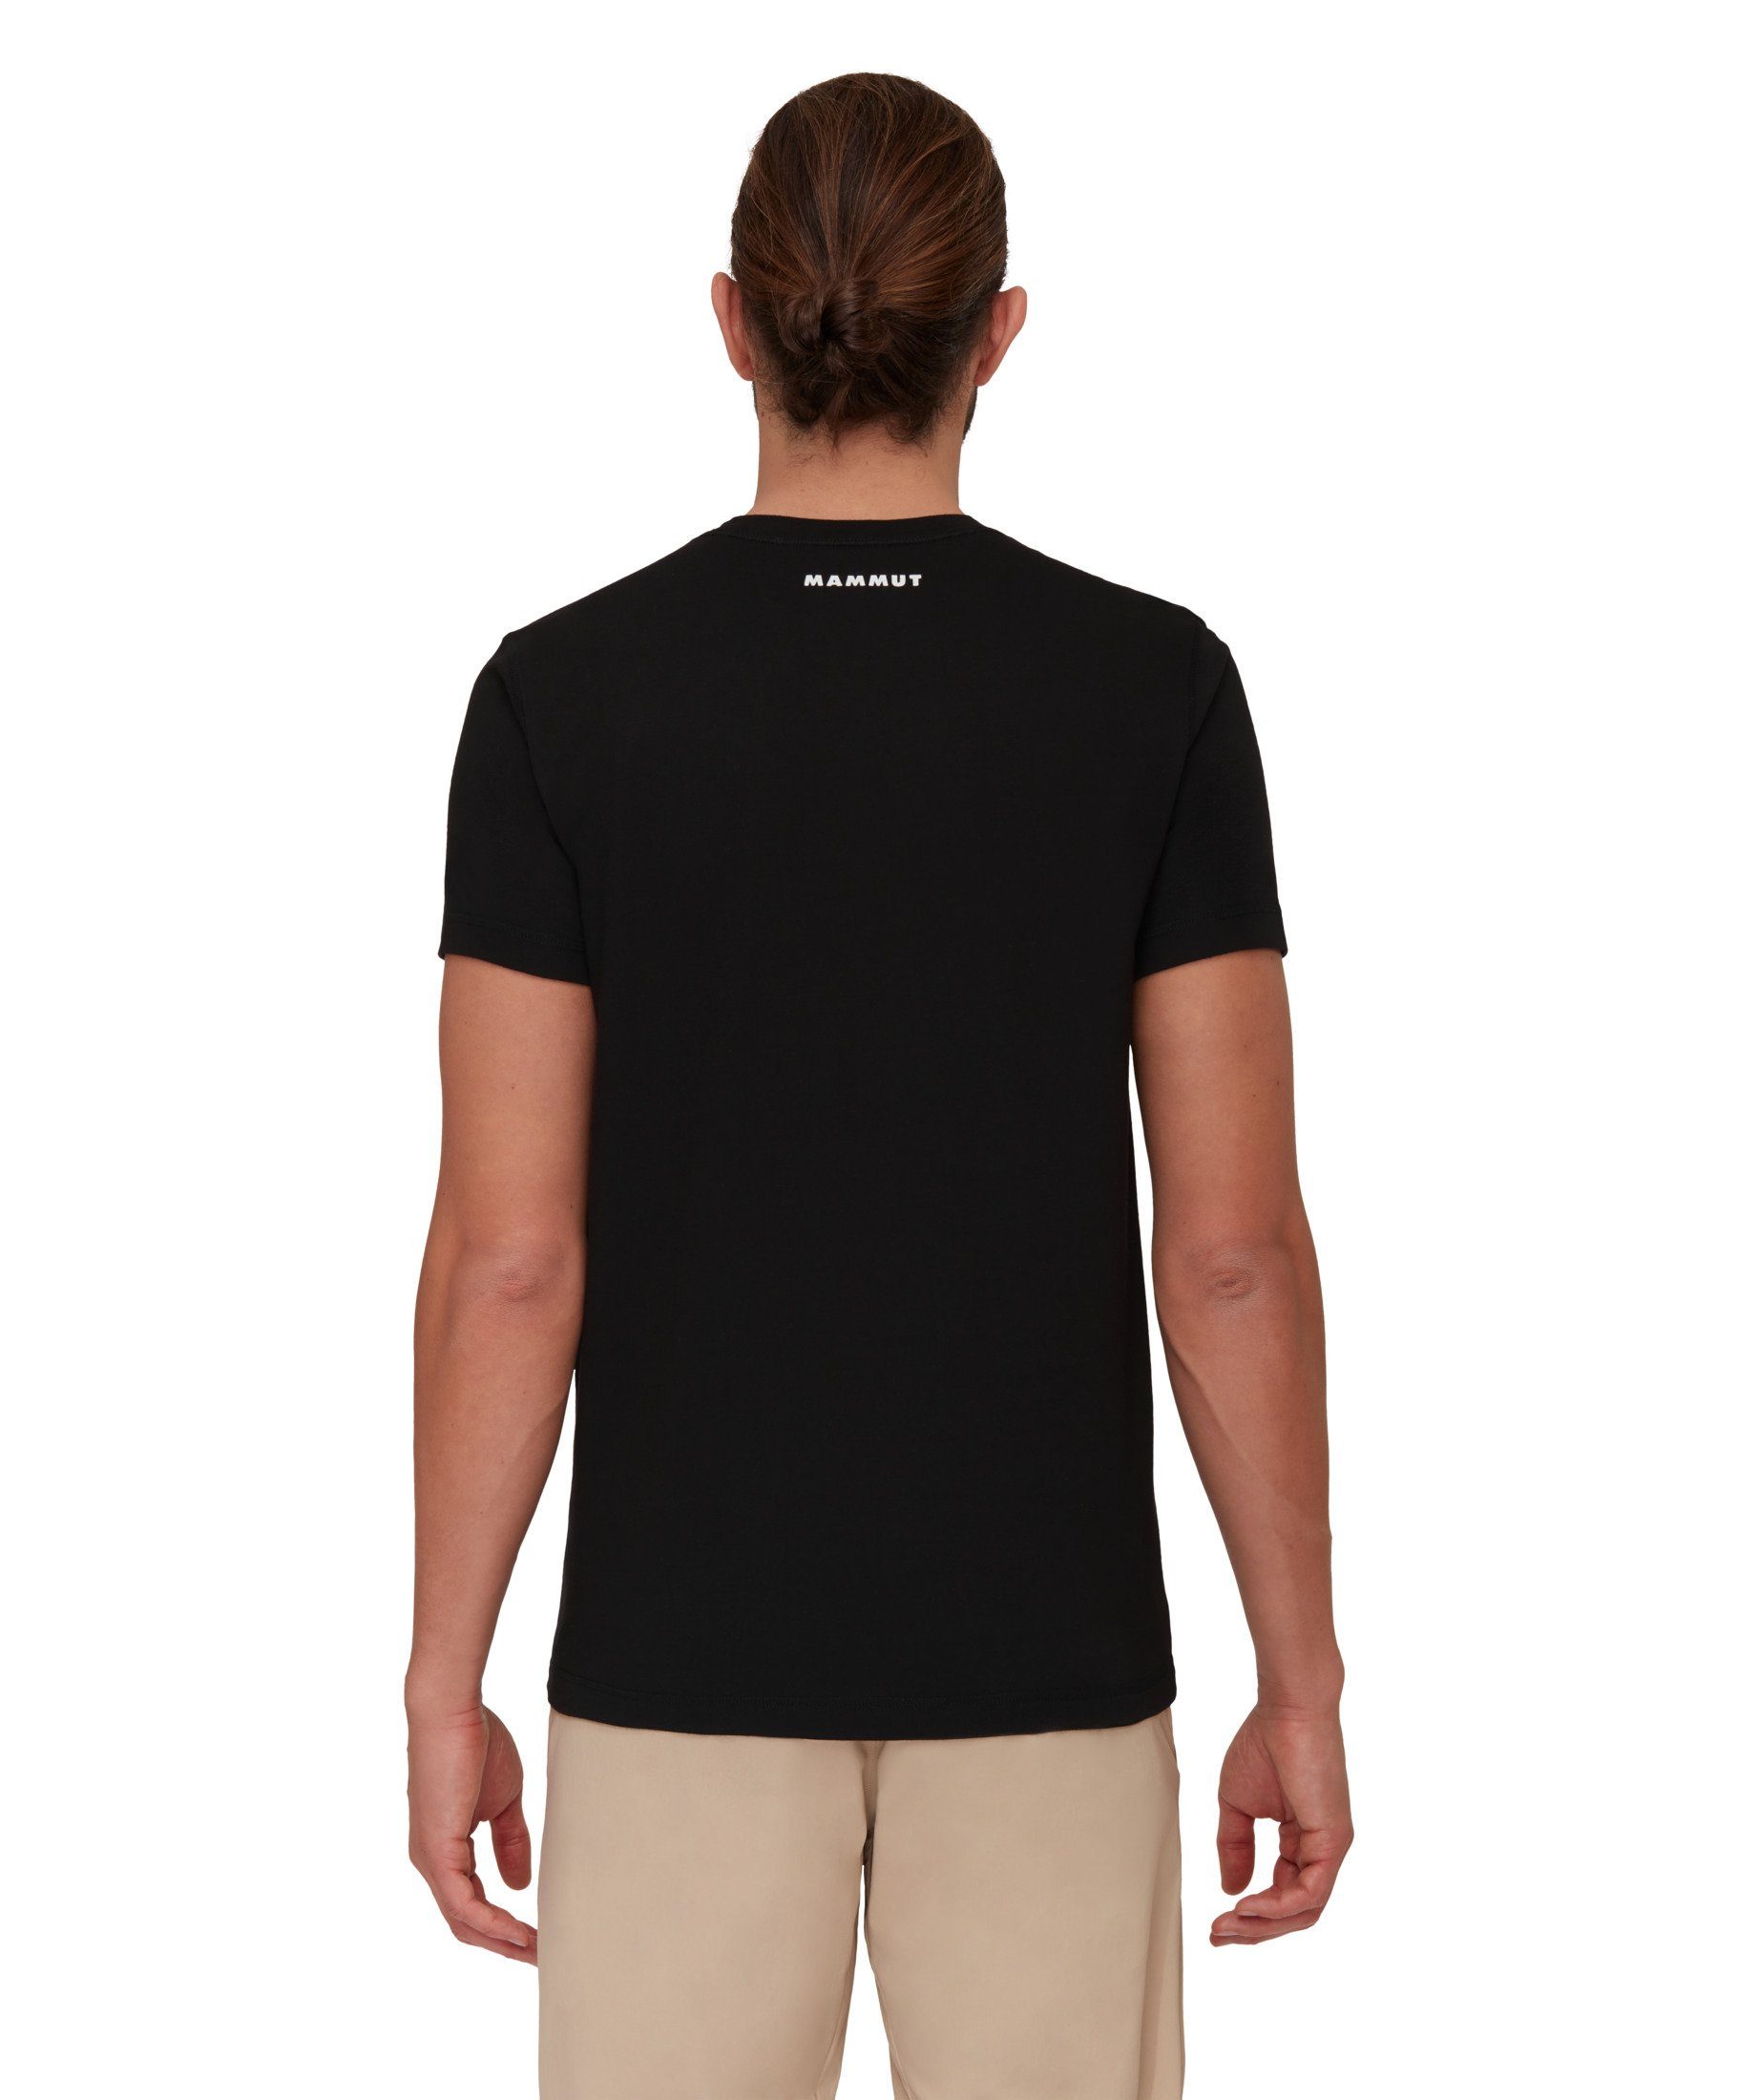 T-Shirt T-Shirt Men Mammut black Core Mammut Logo